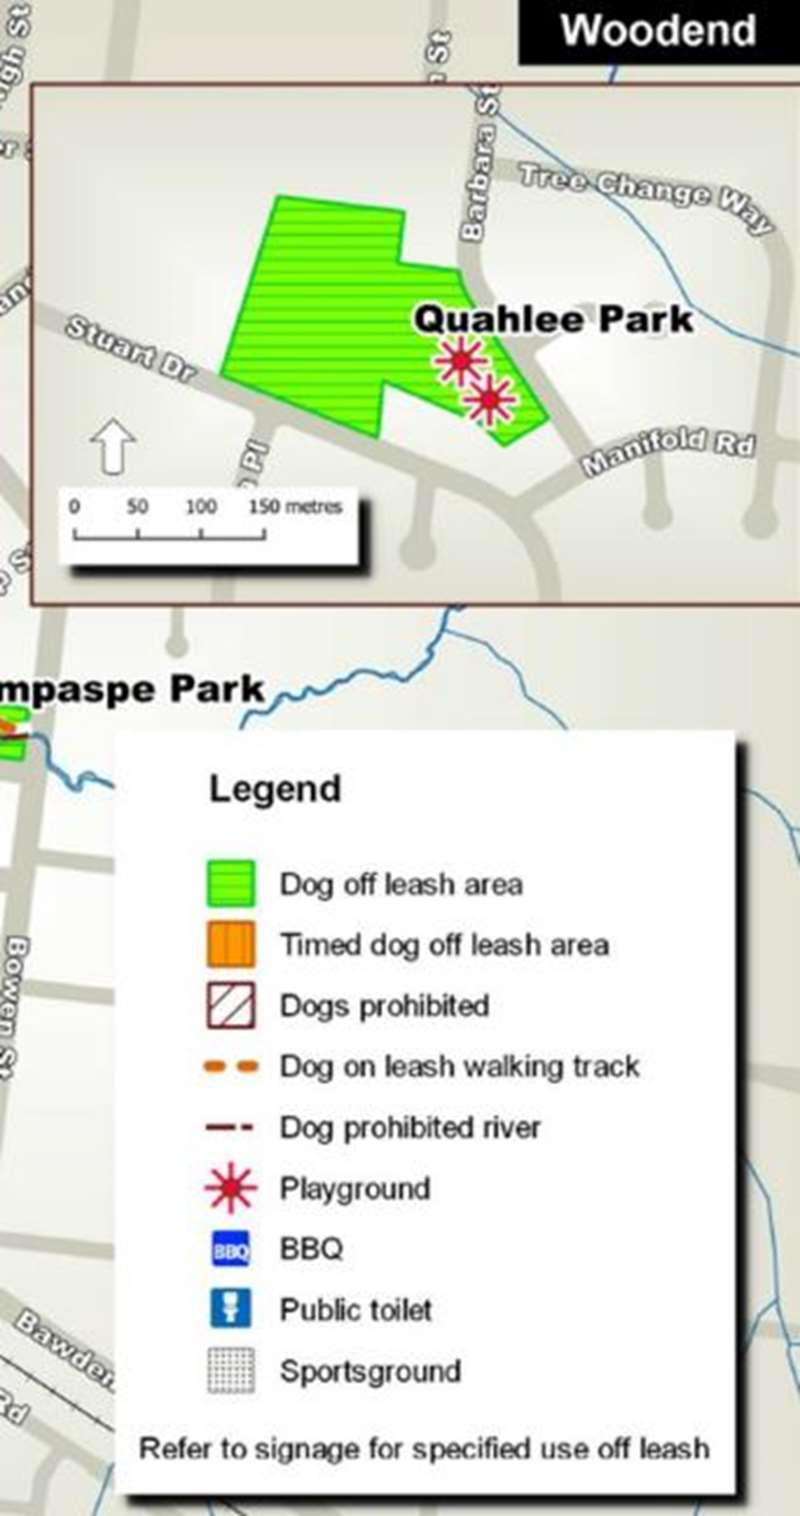 Quahlee Park Dog Off Leash Area (Woodend)